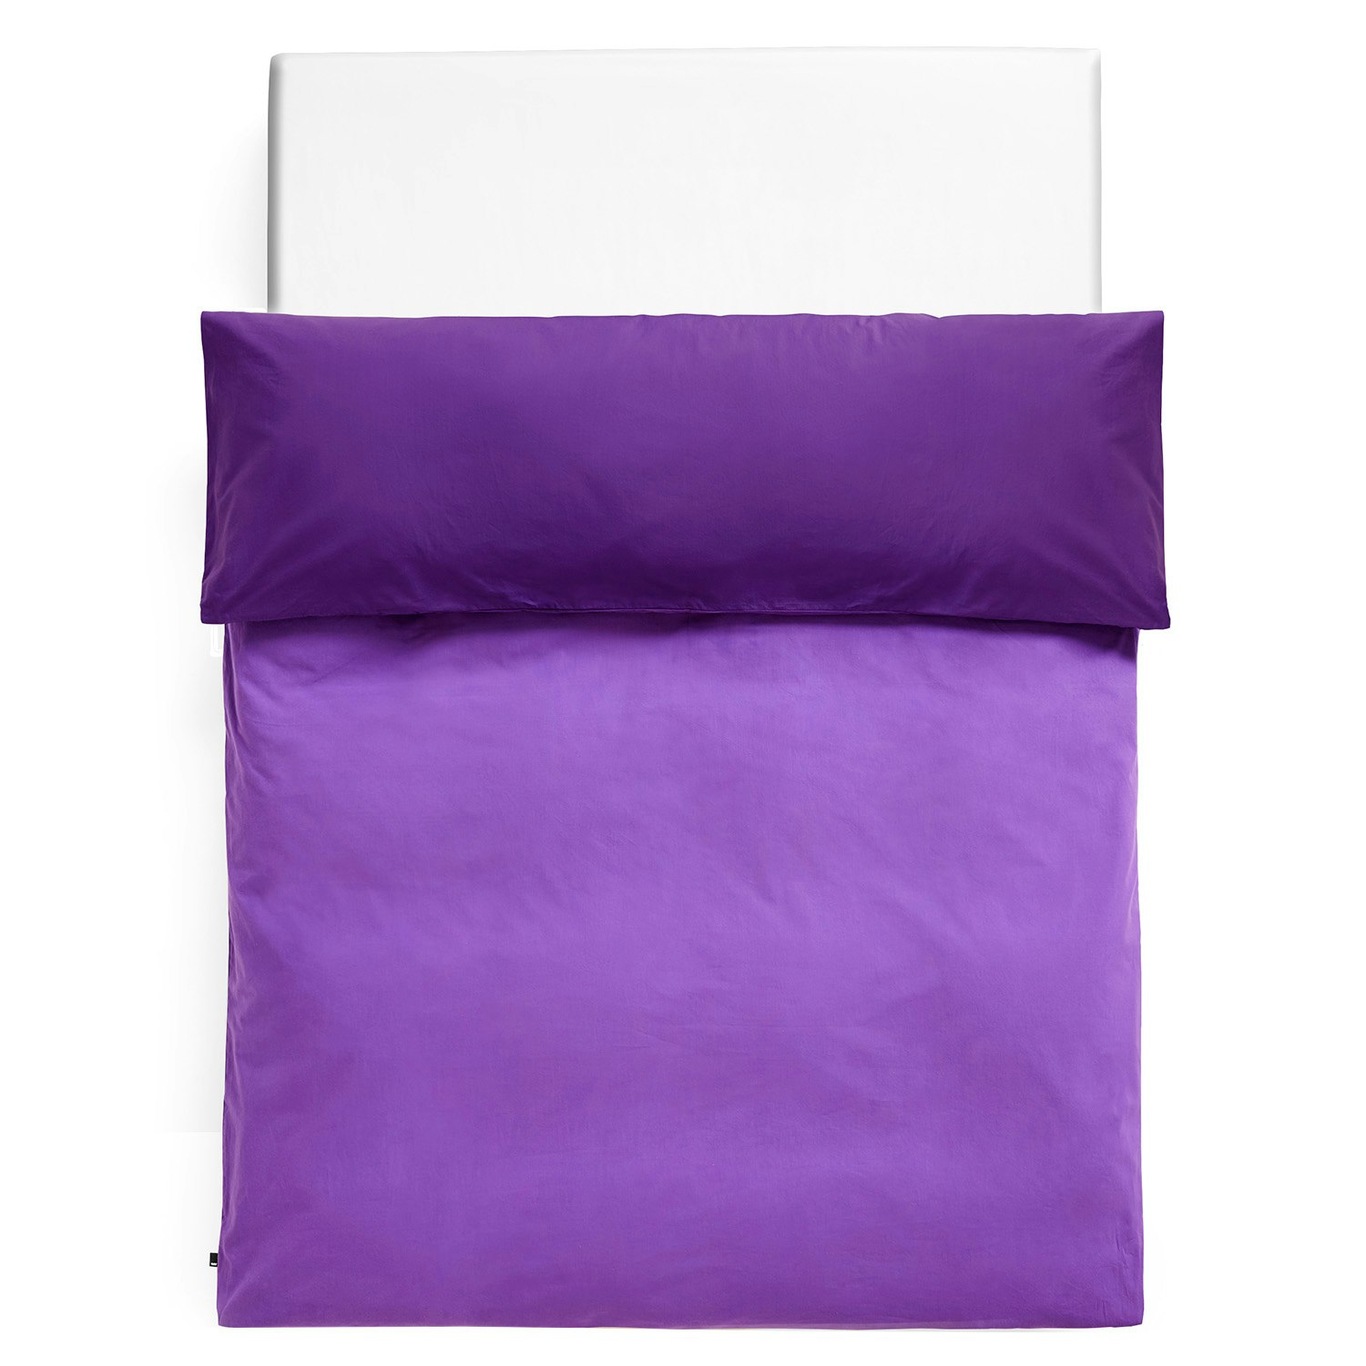 Duo Dynebetræk 220x220 cm, Vivid Purple